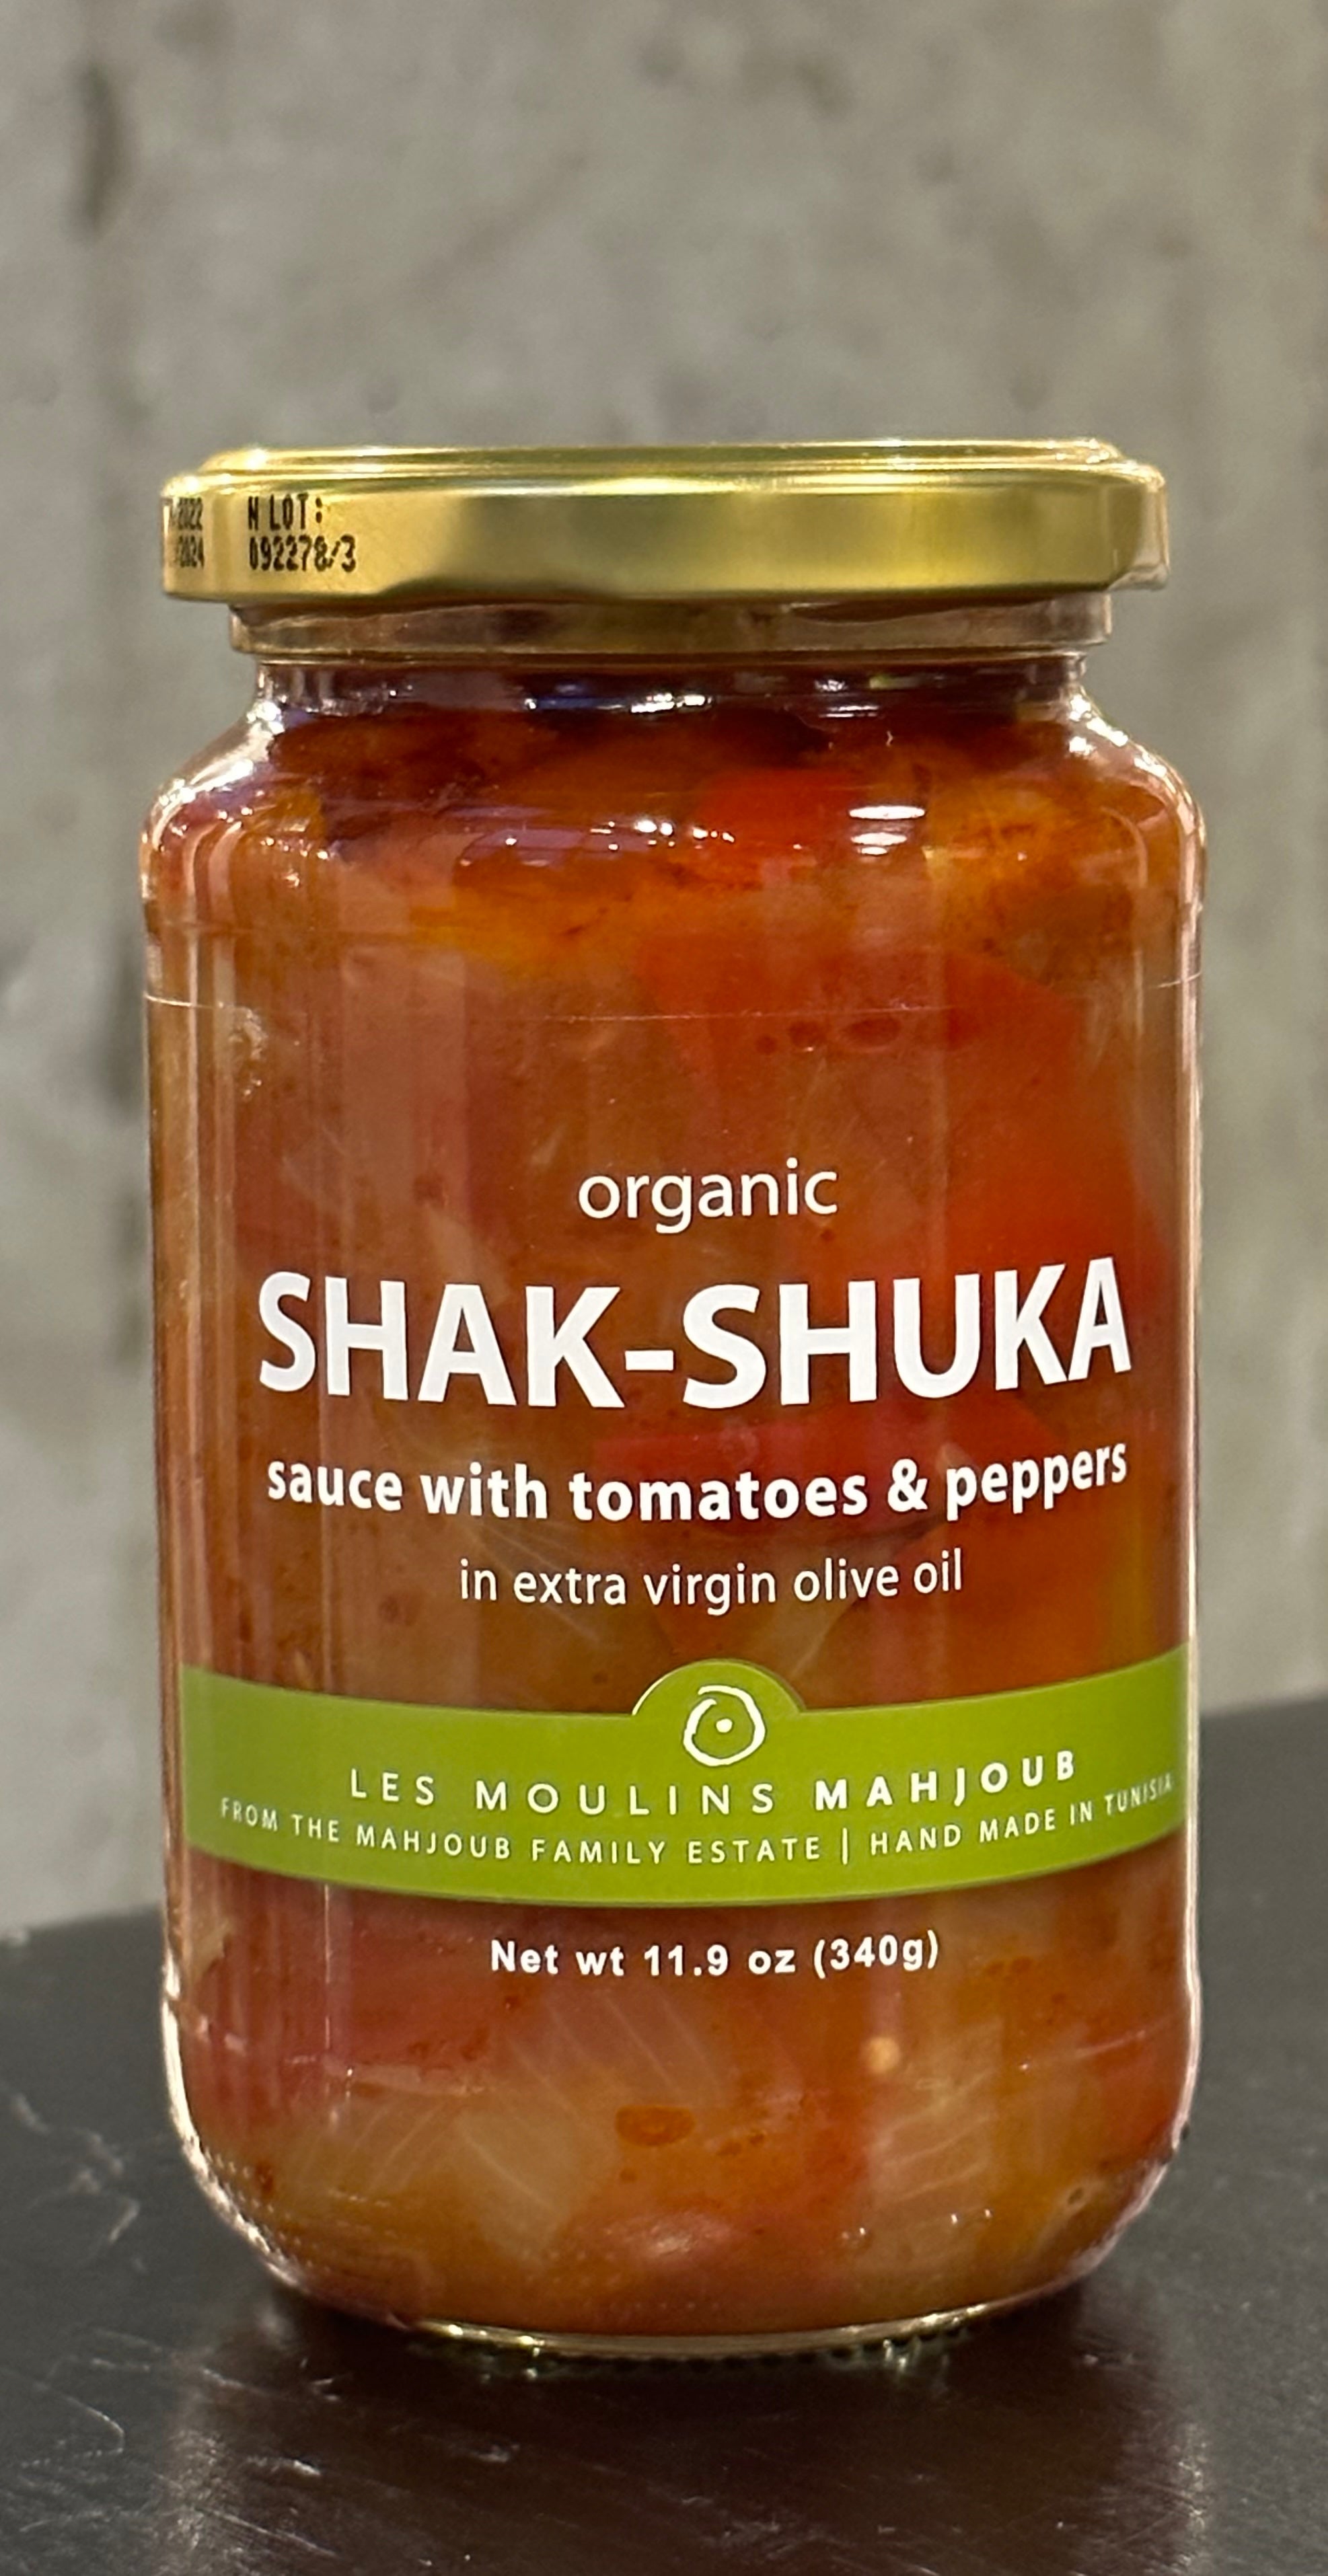 Les Moulins Mahjoub Organic Shak-Shuka Sauce with Tomatoes & Peppers